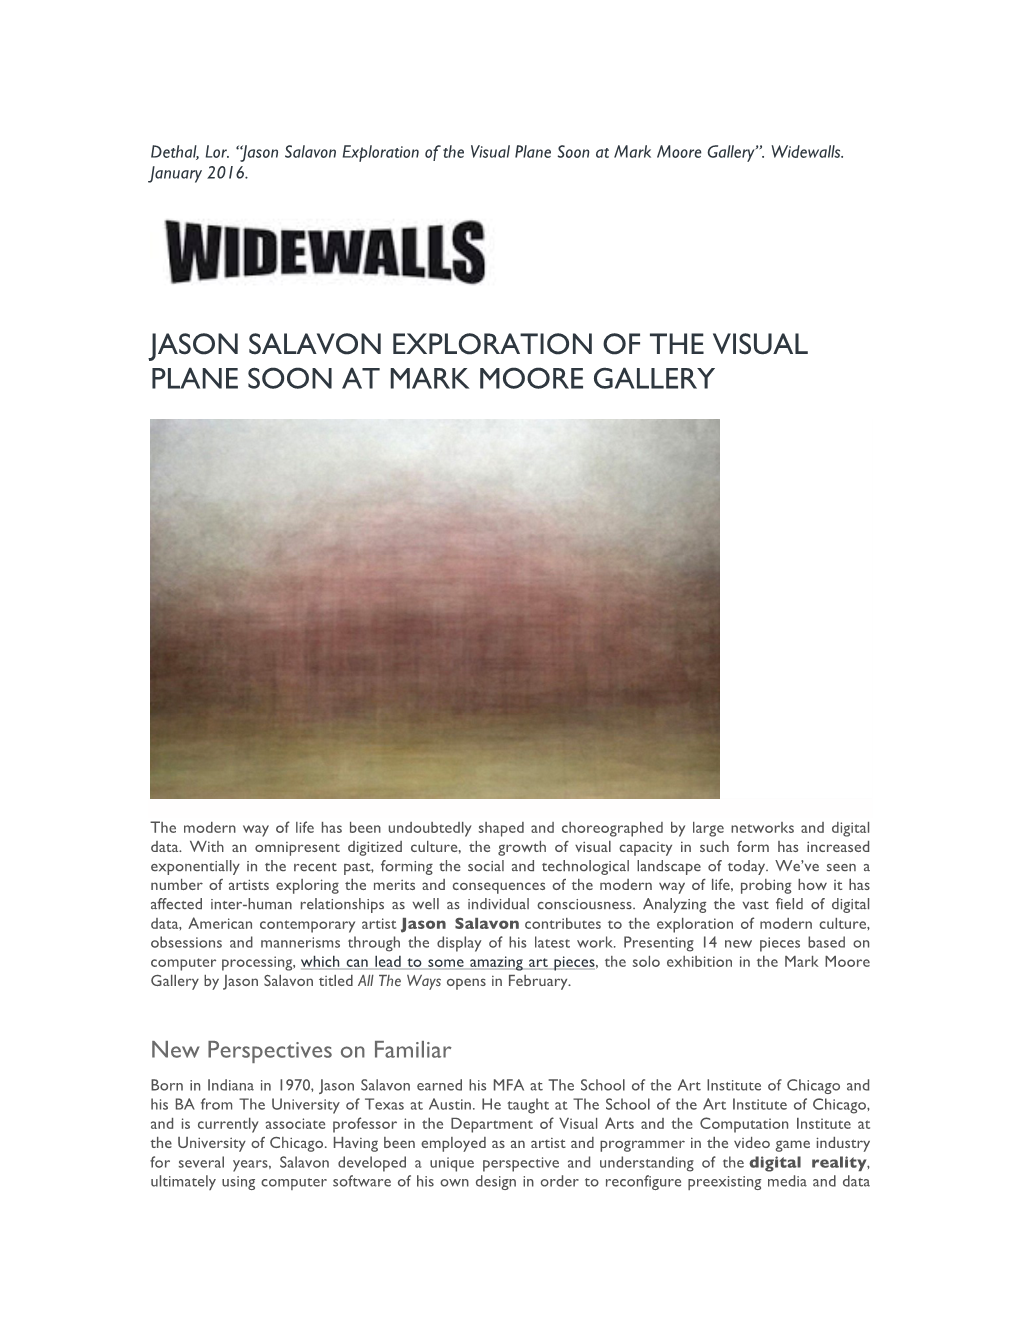 Widewalls Jason Salavon Exploration of the Visual Plane Soon at Mark